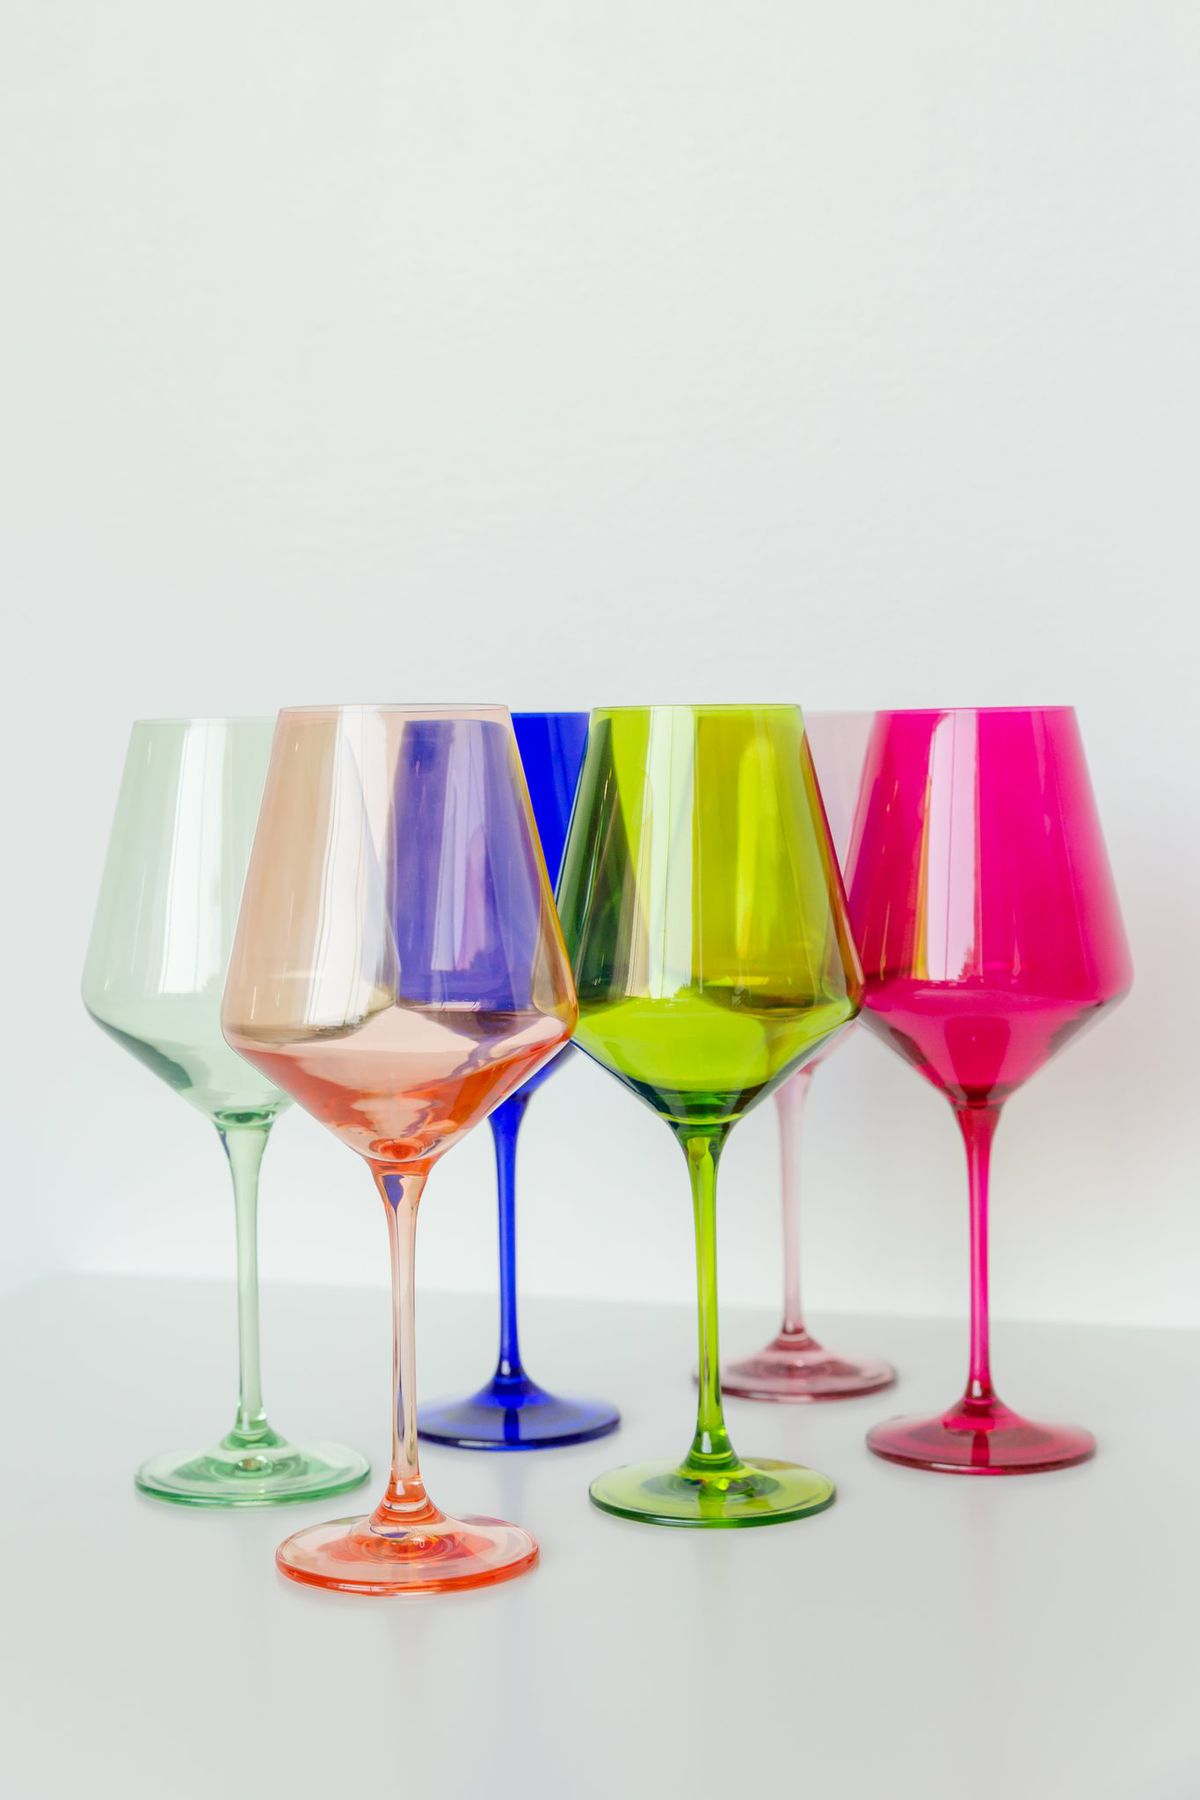 Six wine glasses in jewel tones of green, pink, blue, peach, fuchsia, and mint